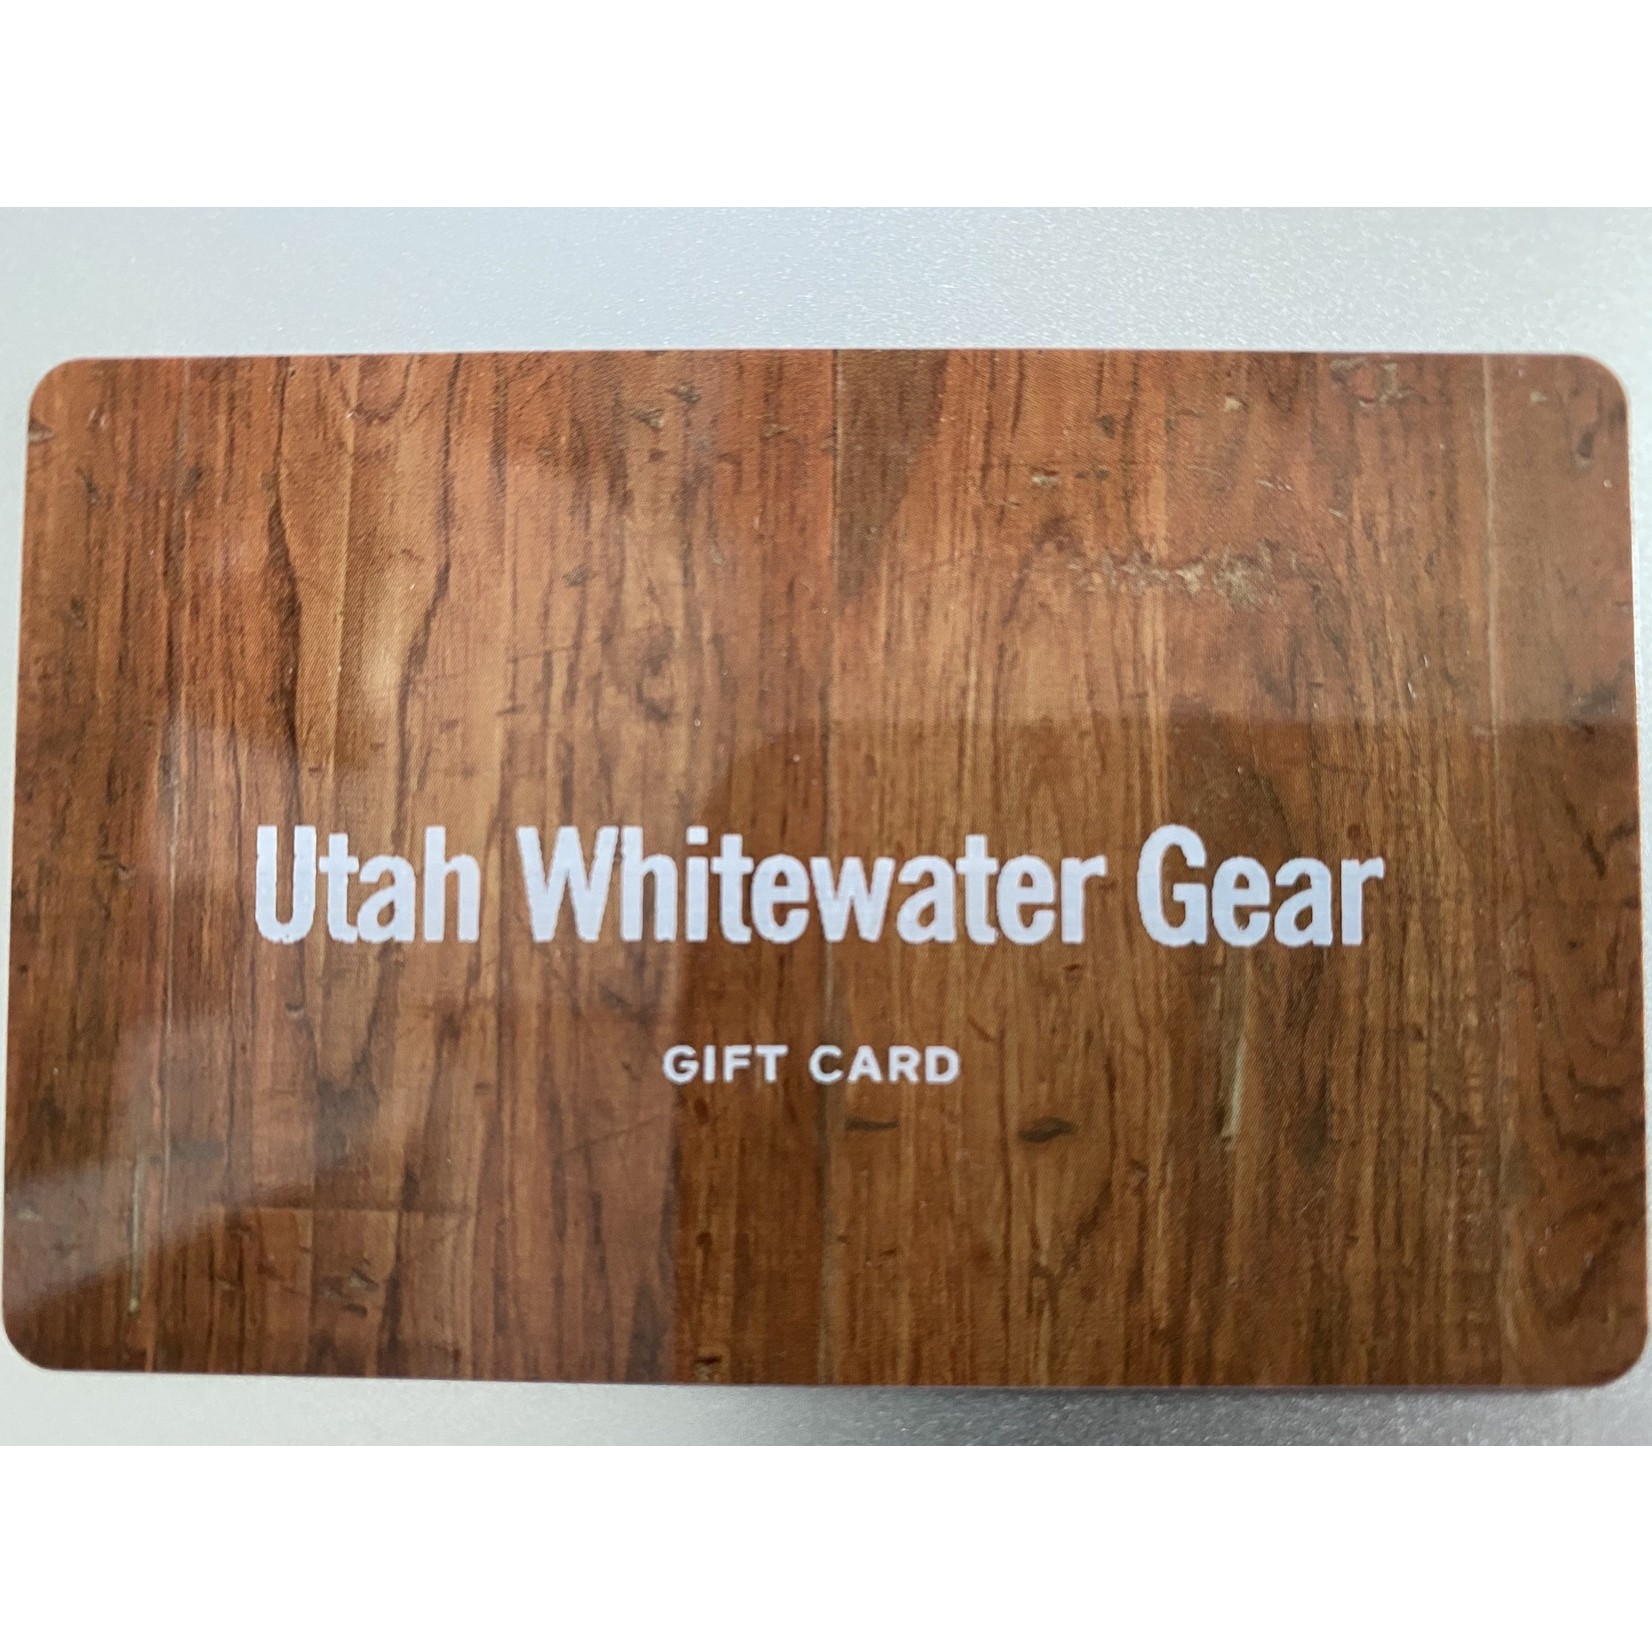 UWG Utah Whitewater Gear Gift Card